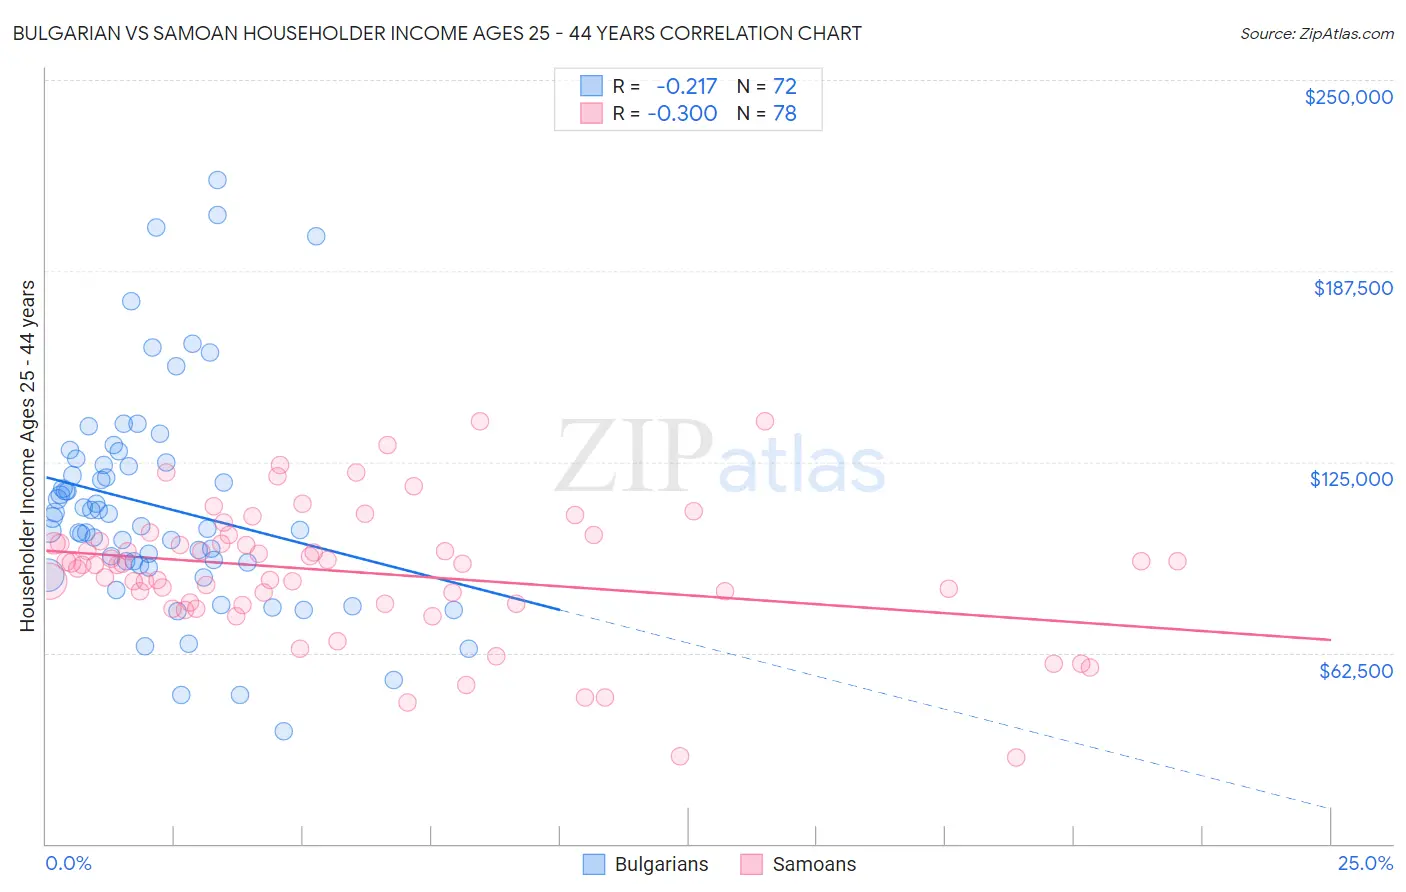 Bulgarian vs Samoan Householder Income Ages 25 - 44 years